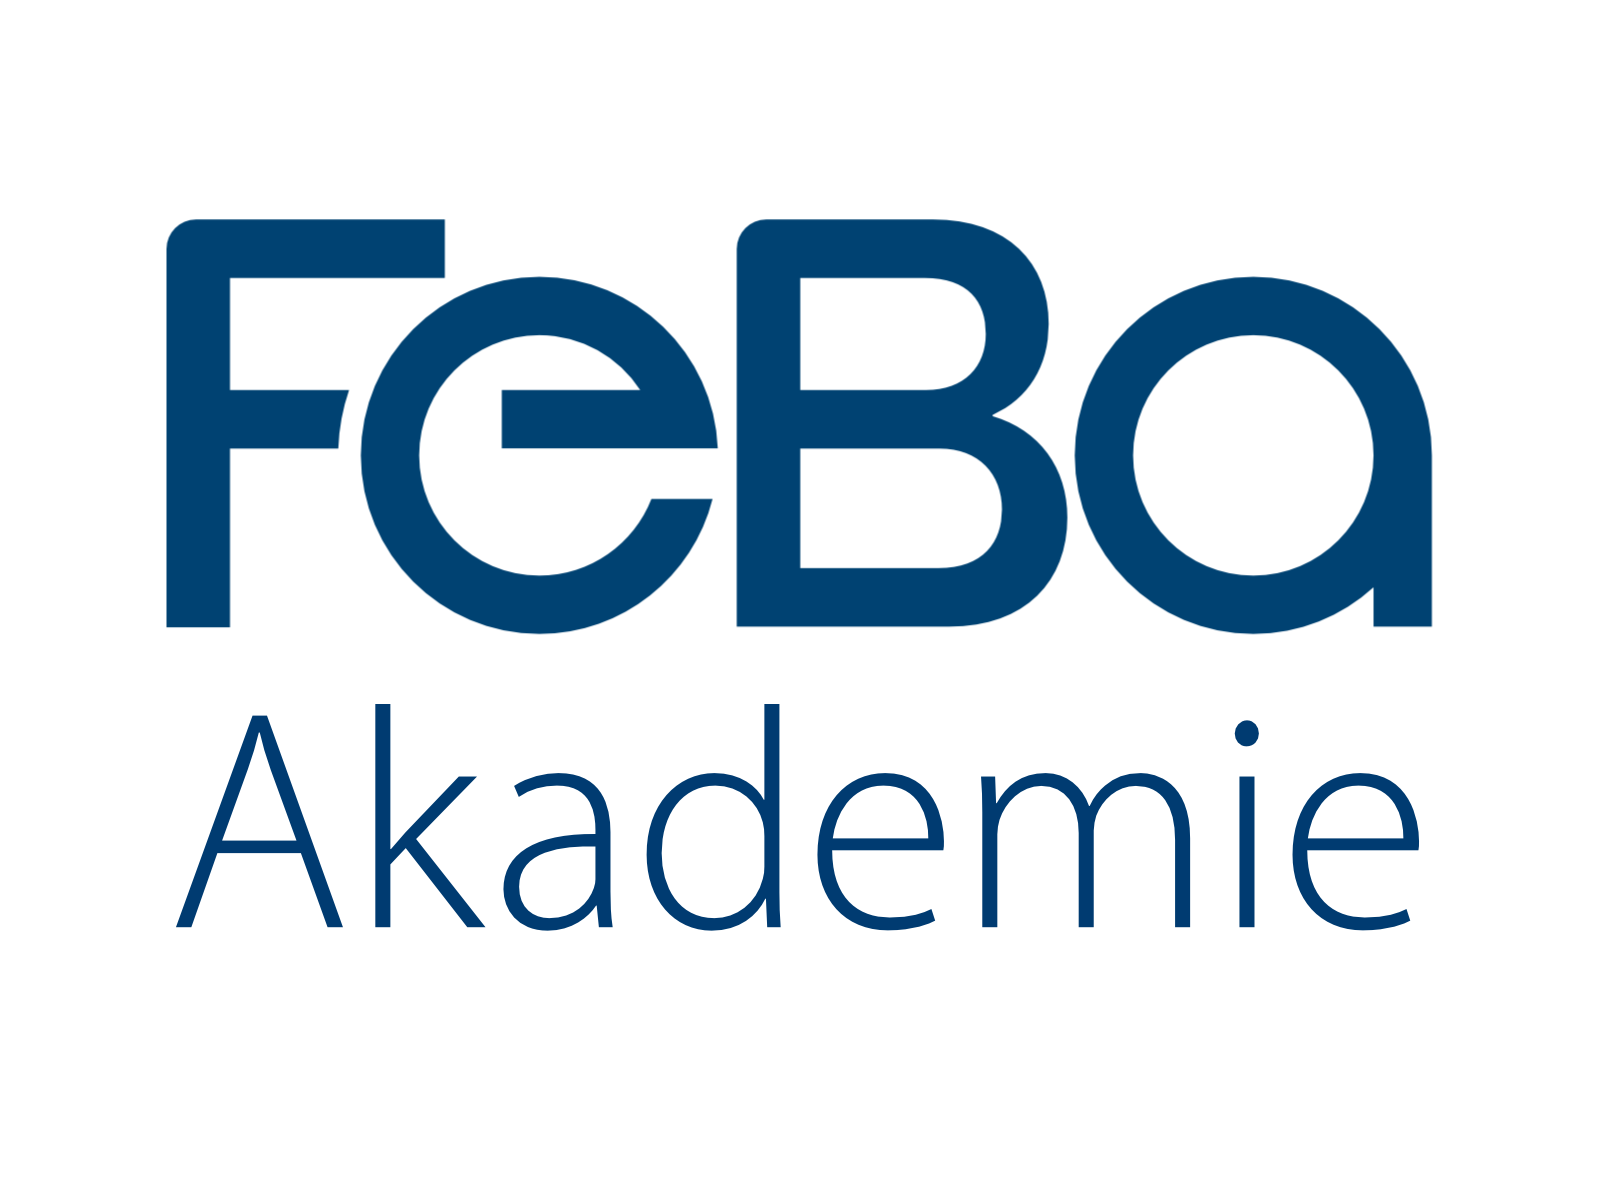 FeBa Akademie